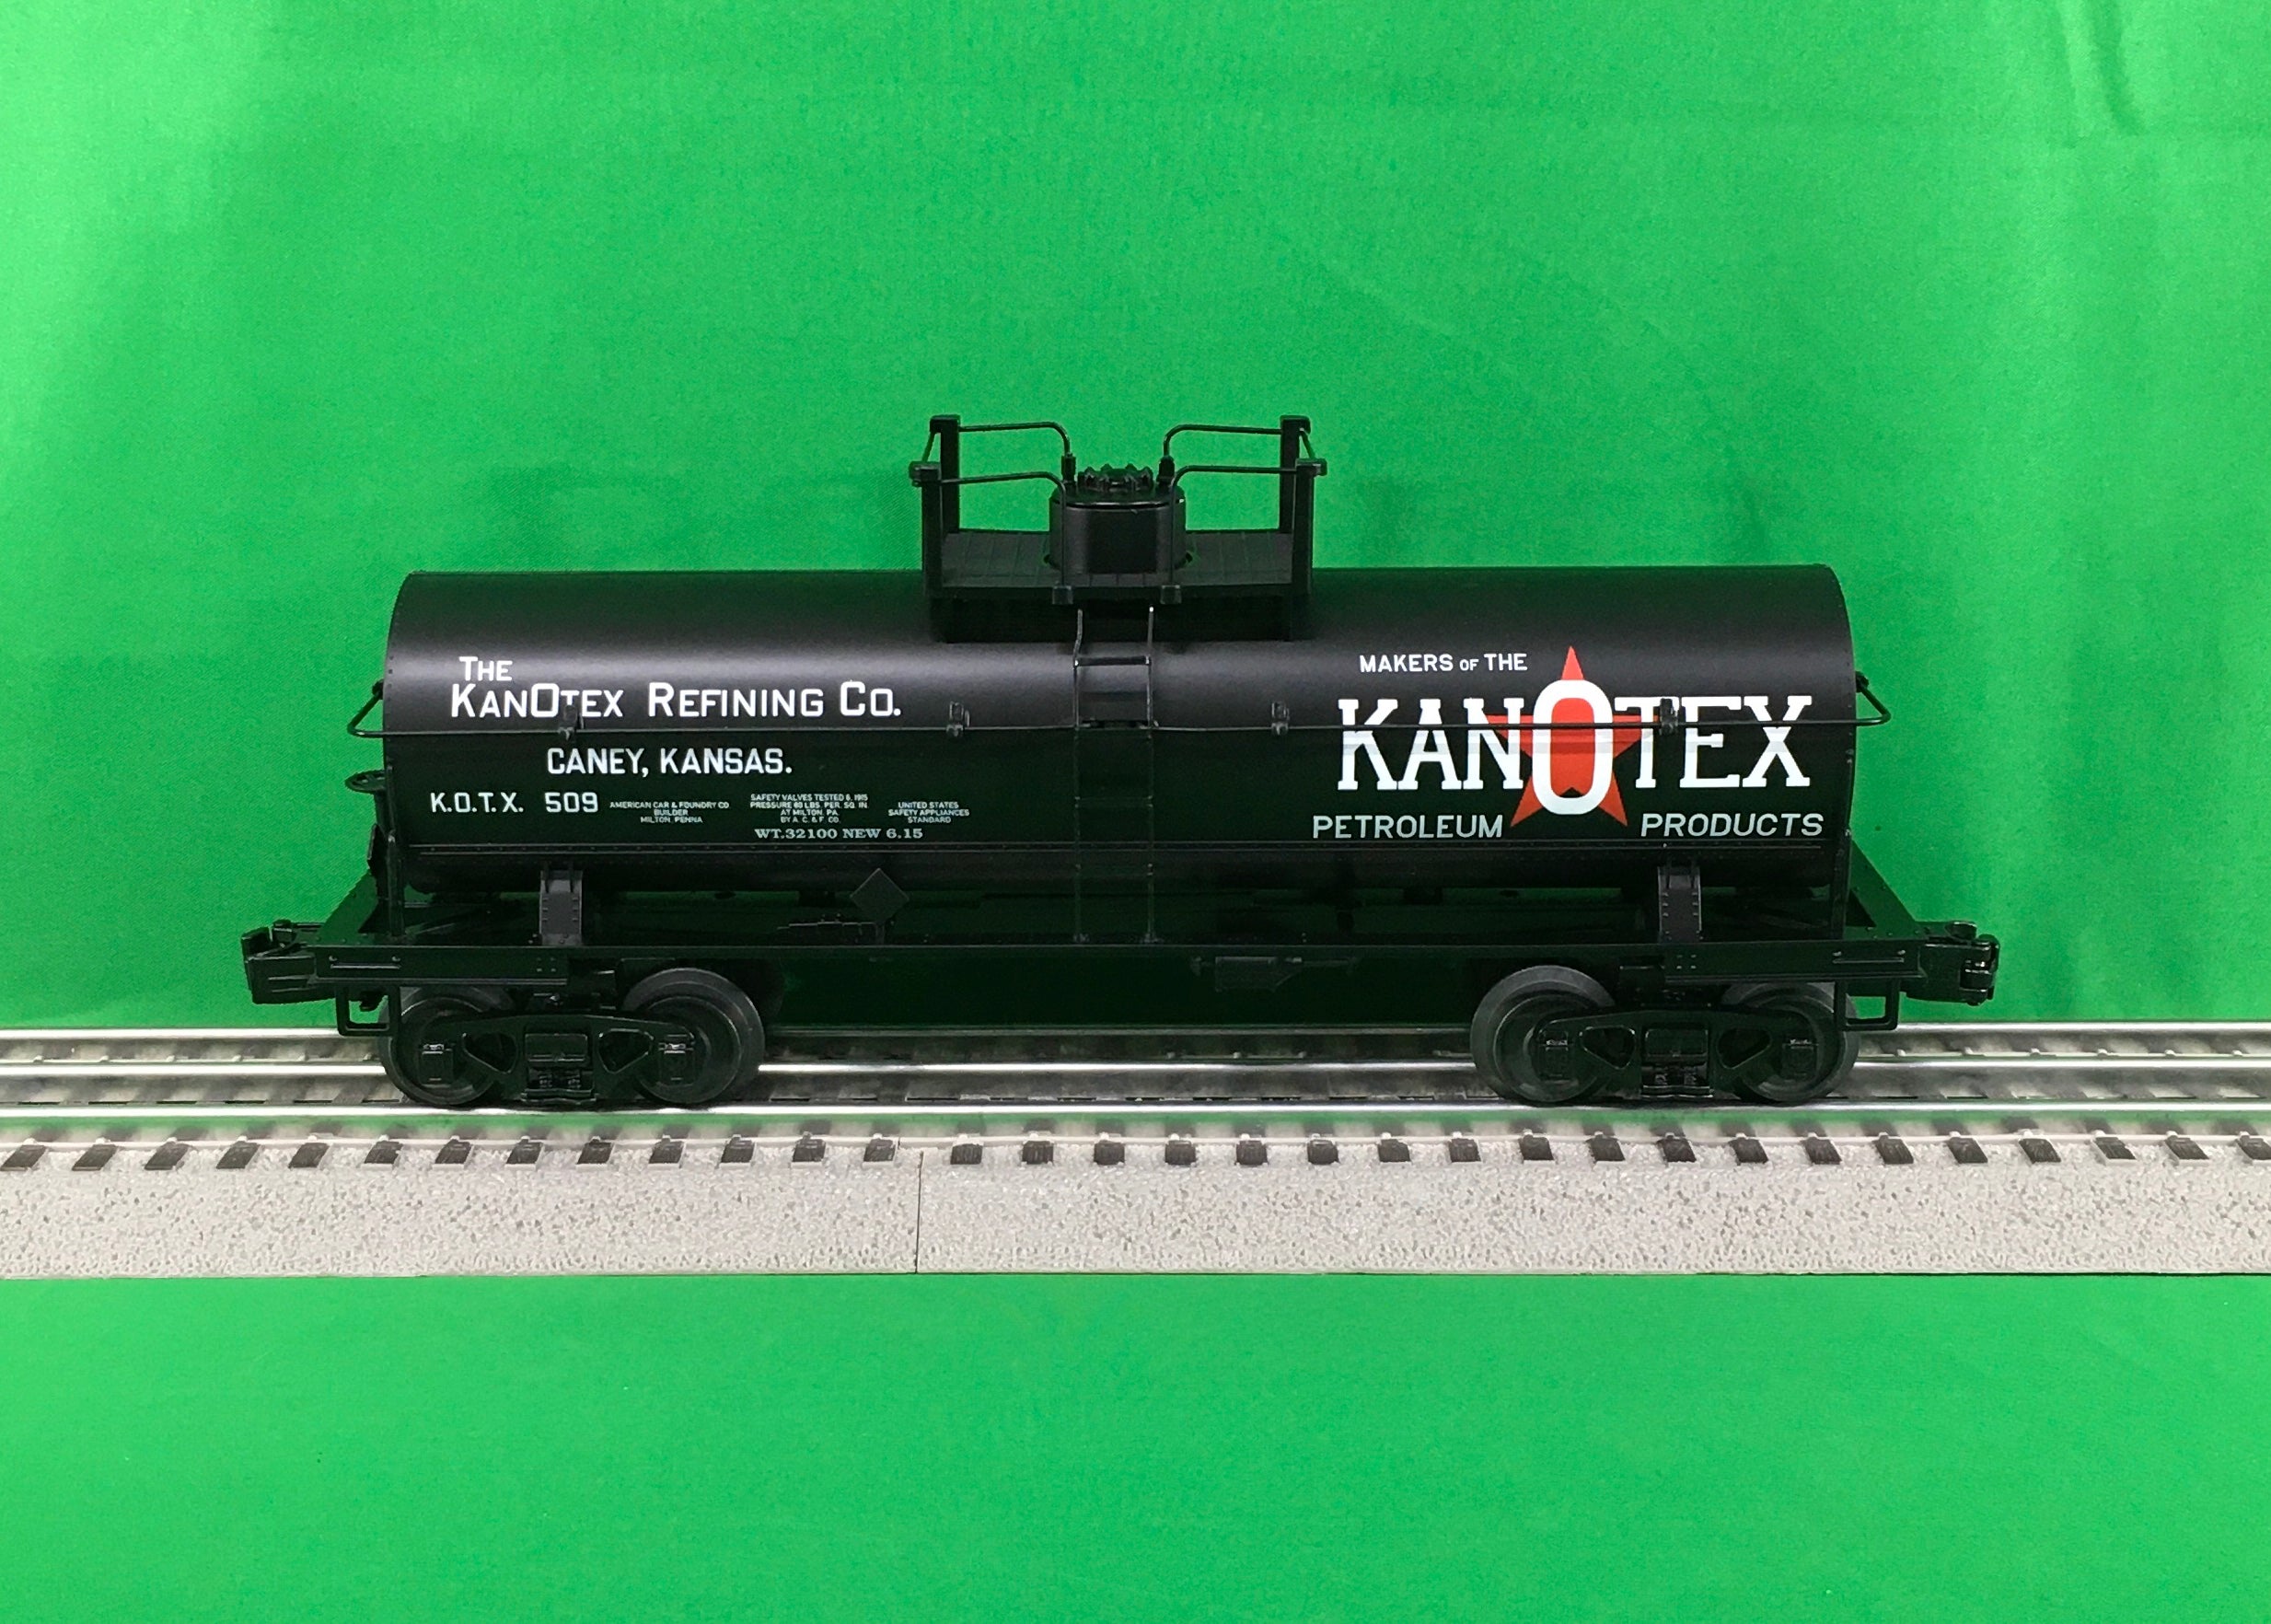 MTH 30-73612 - Tank Car "Kanotex Refining" #509